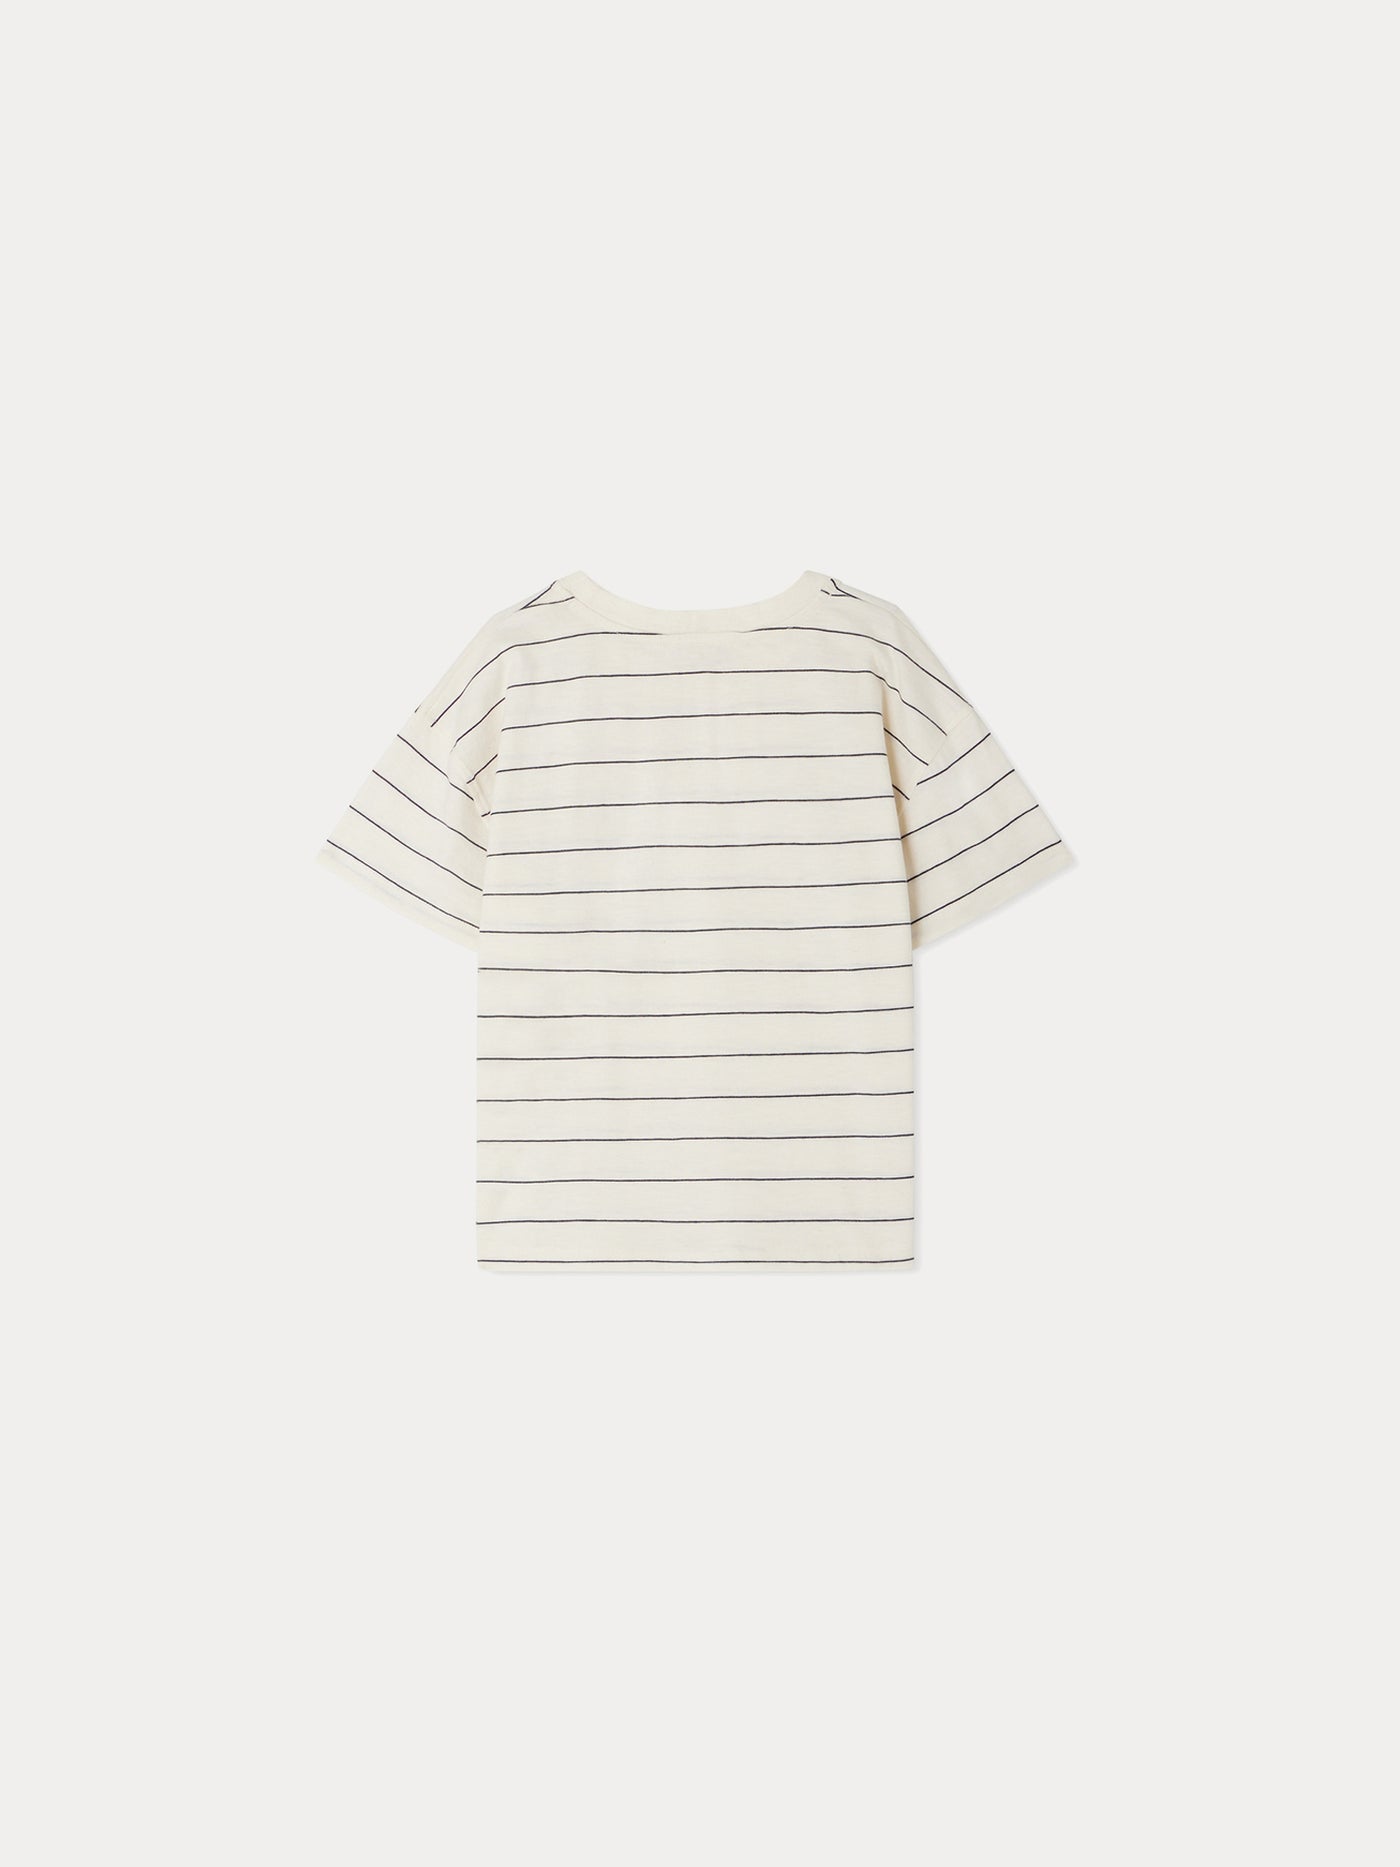 Gio striped white T-shirt